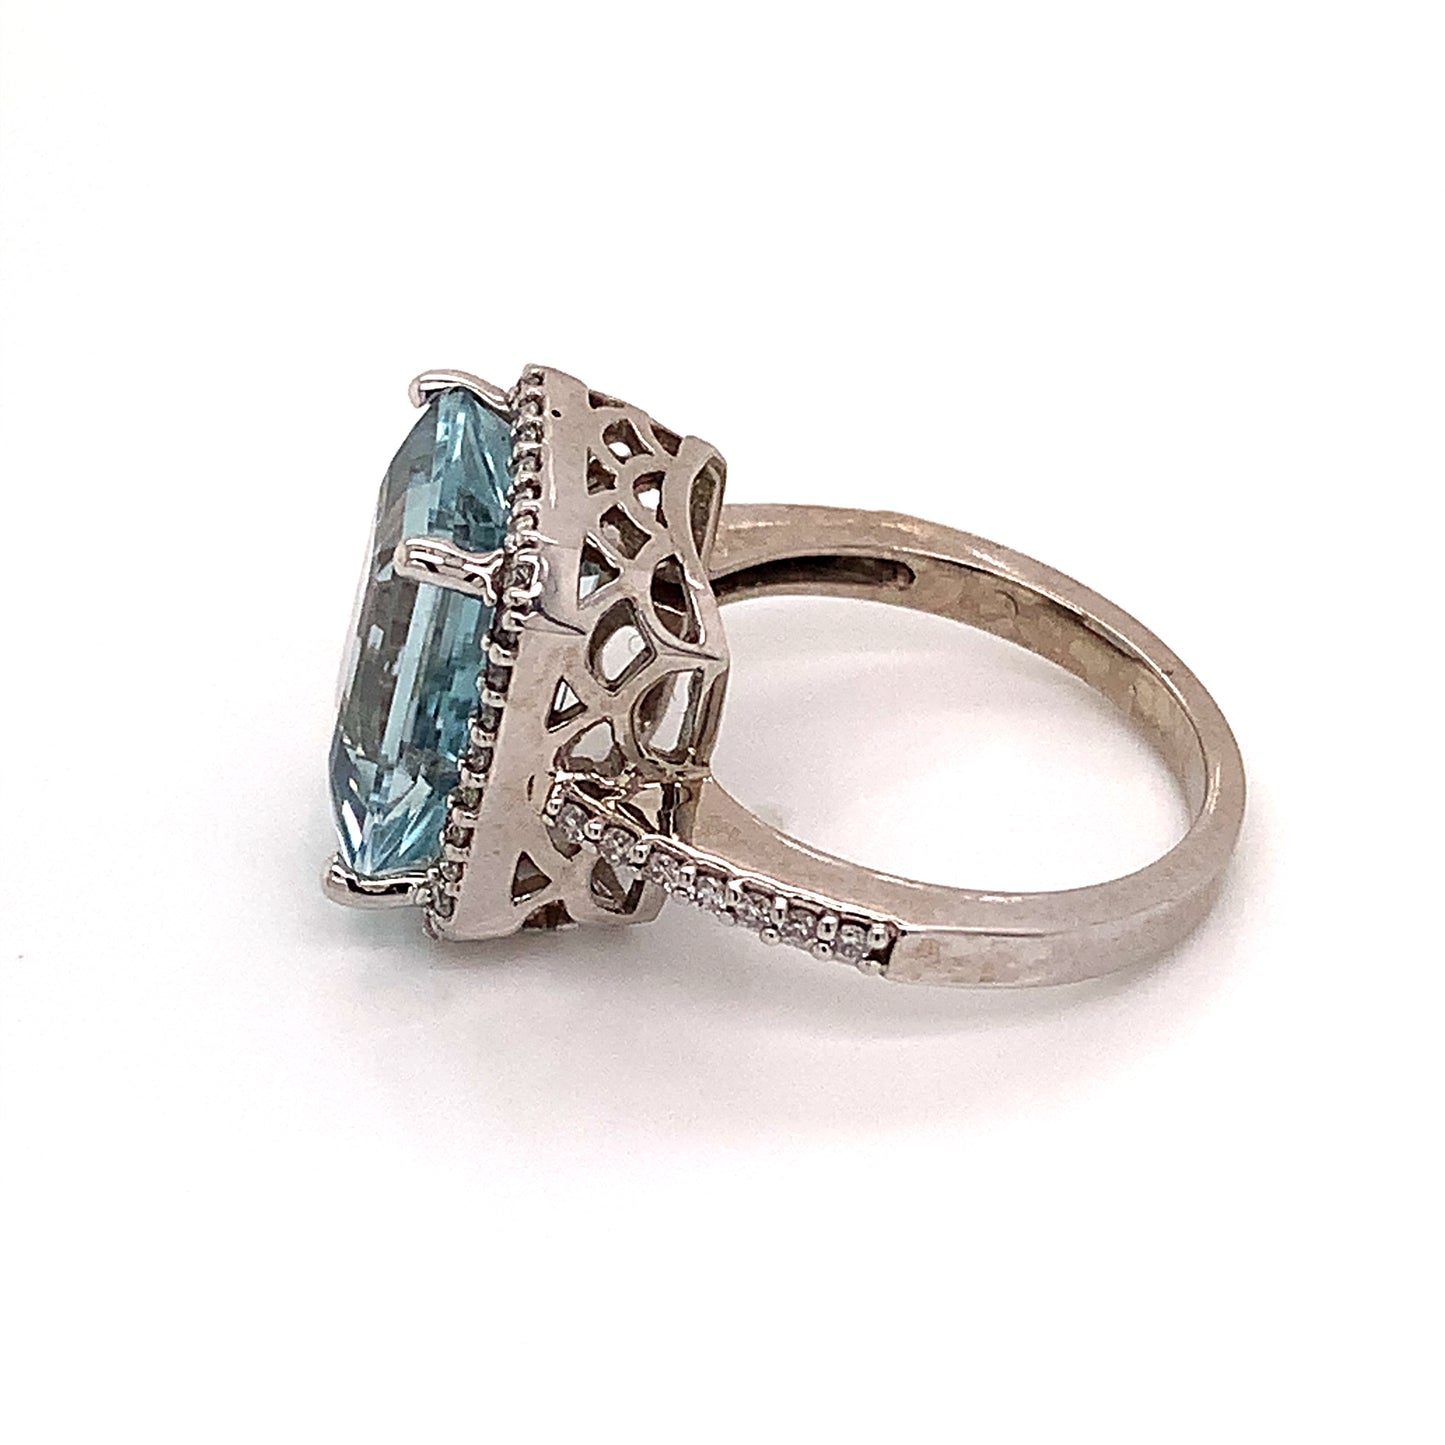 Aquamarine Diamond Ring 14k Gold Size 6.5, 6 TCW Certified $6,950 121105 - Certified Estate Jewelry